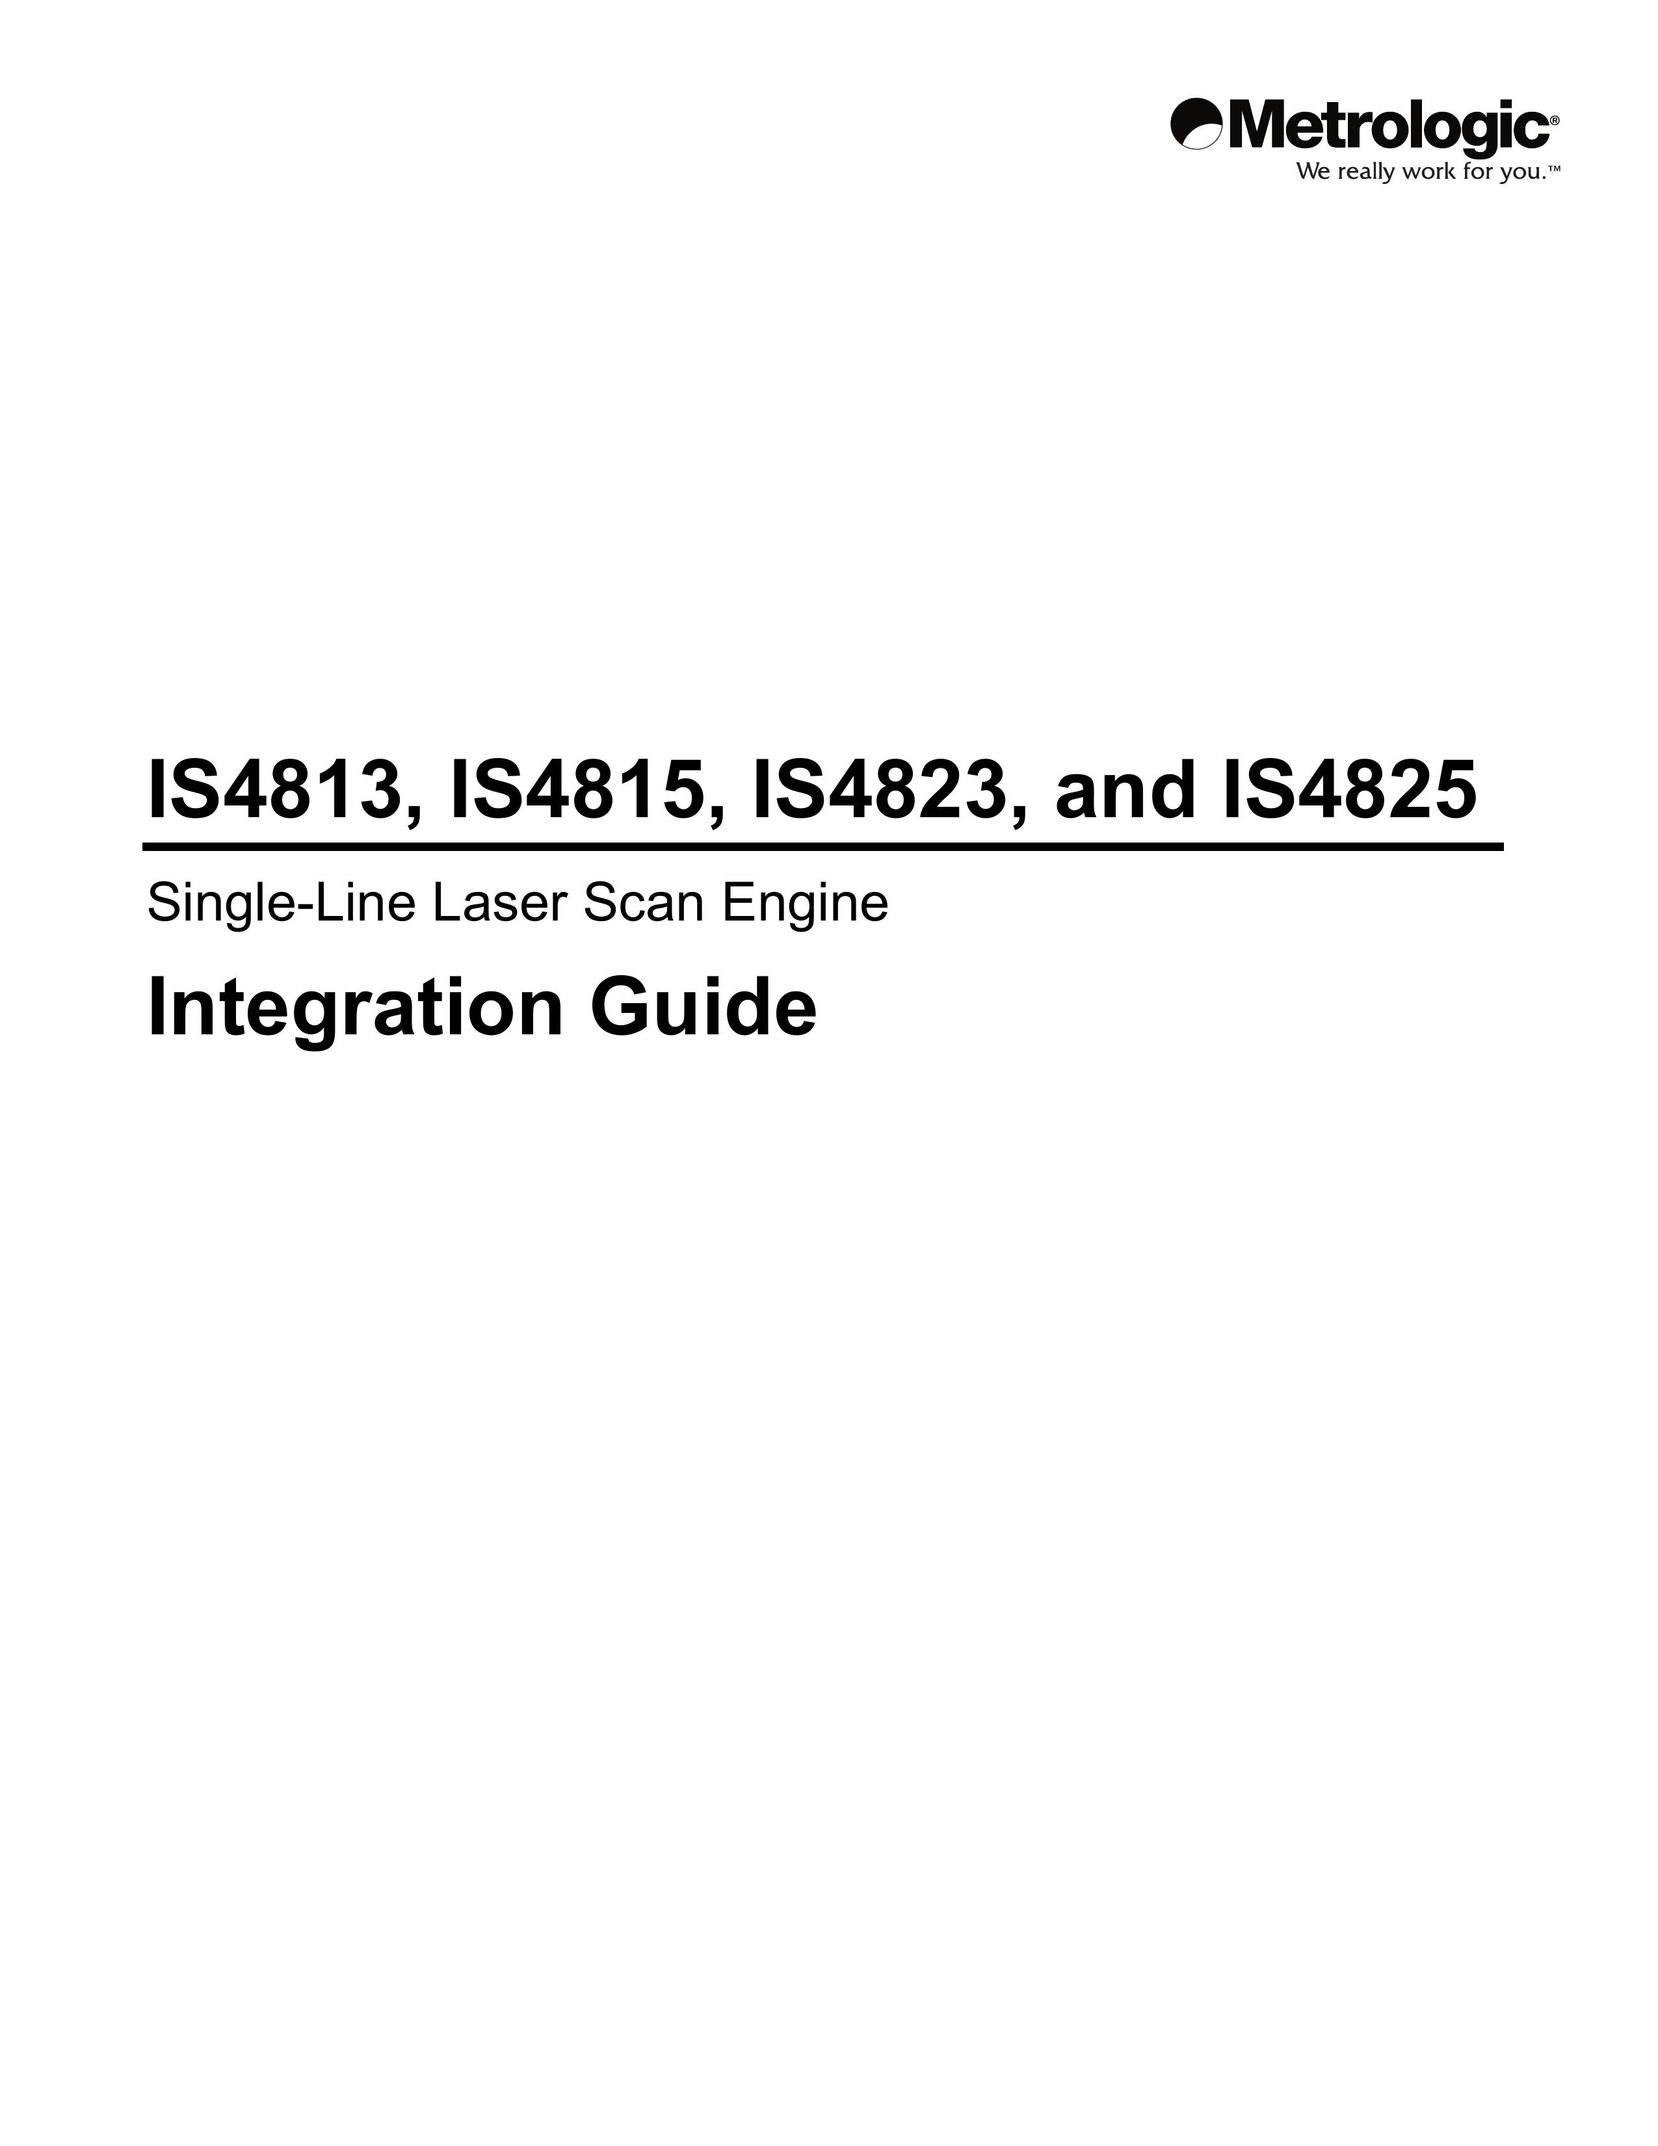 Metrologic Instruments IS4823 Scanner User Manual